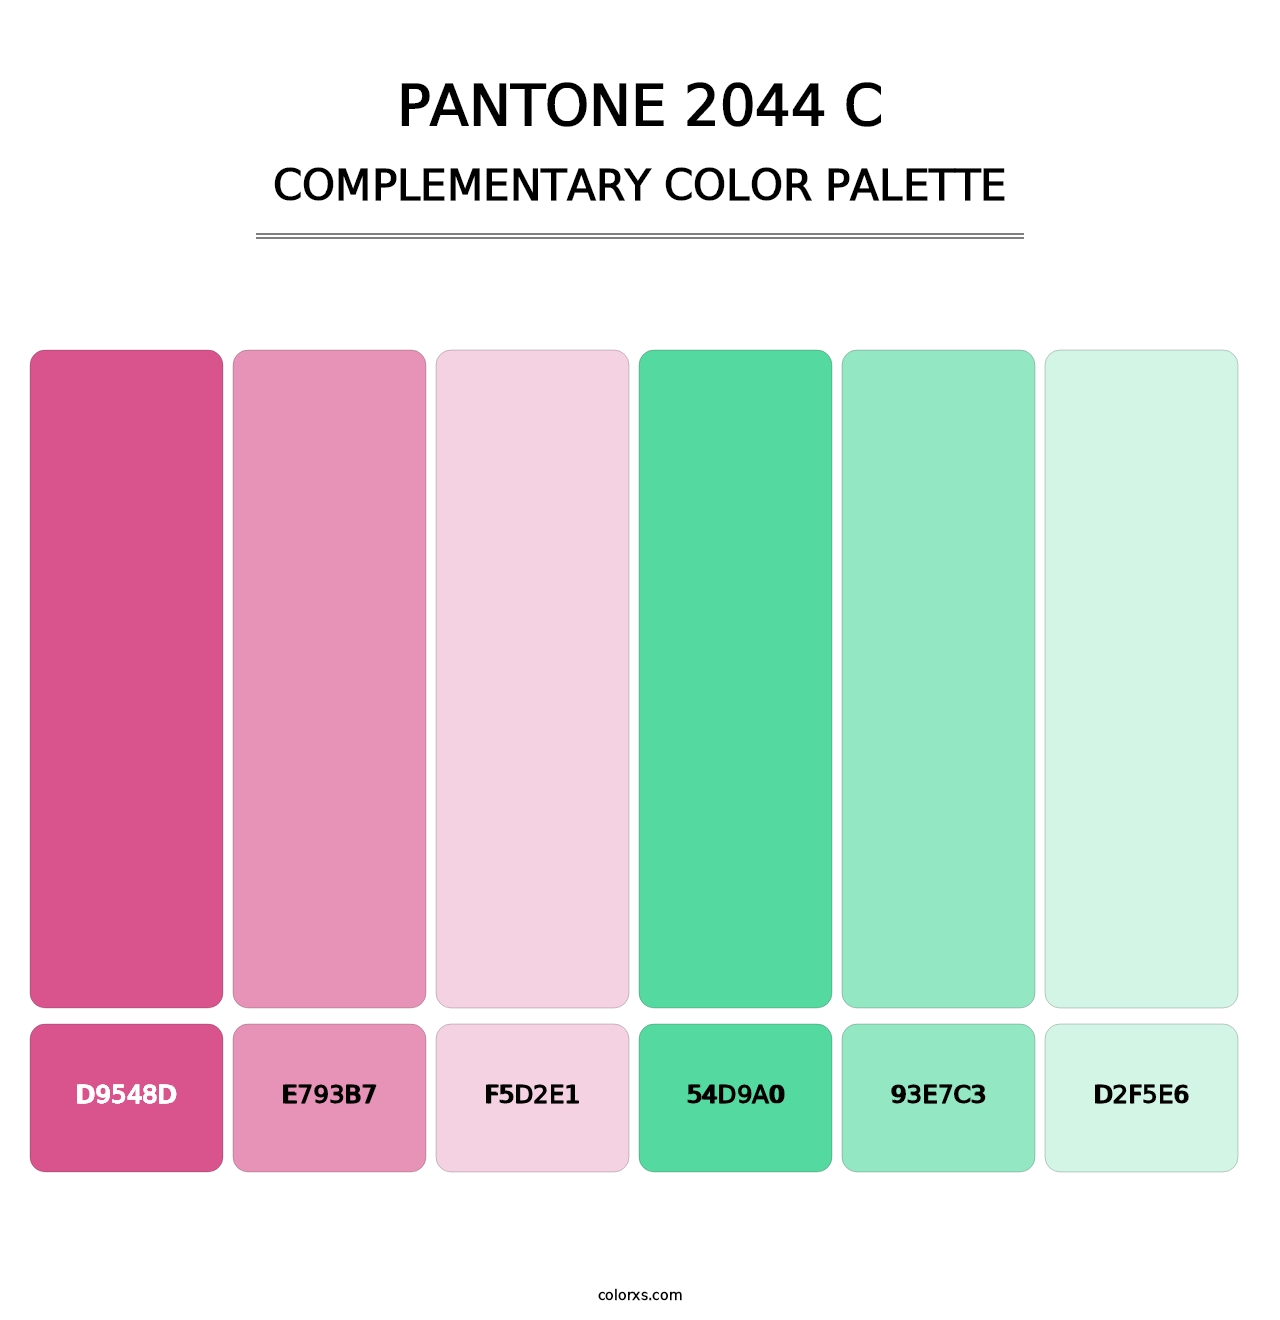 PANTONE 2044 C - Complementary Color Palette